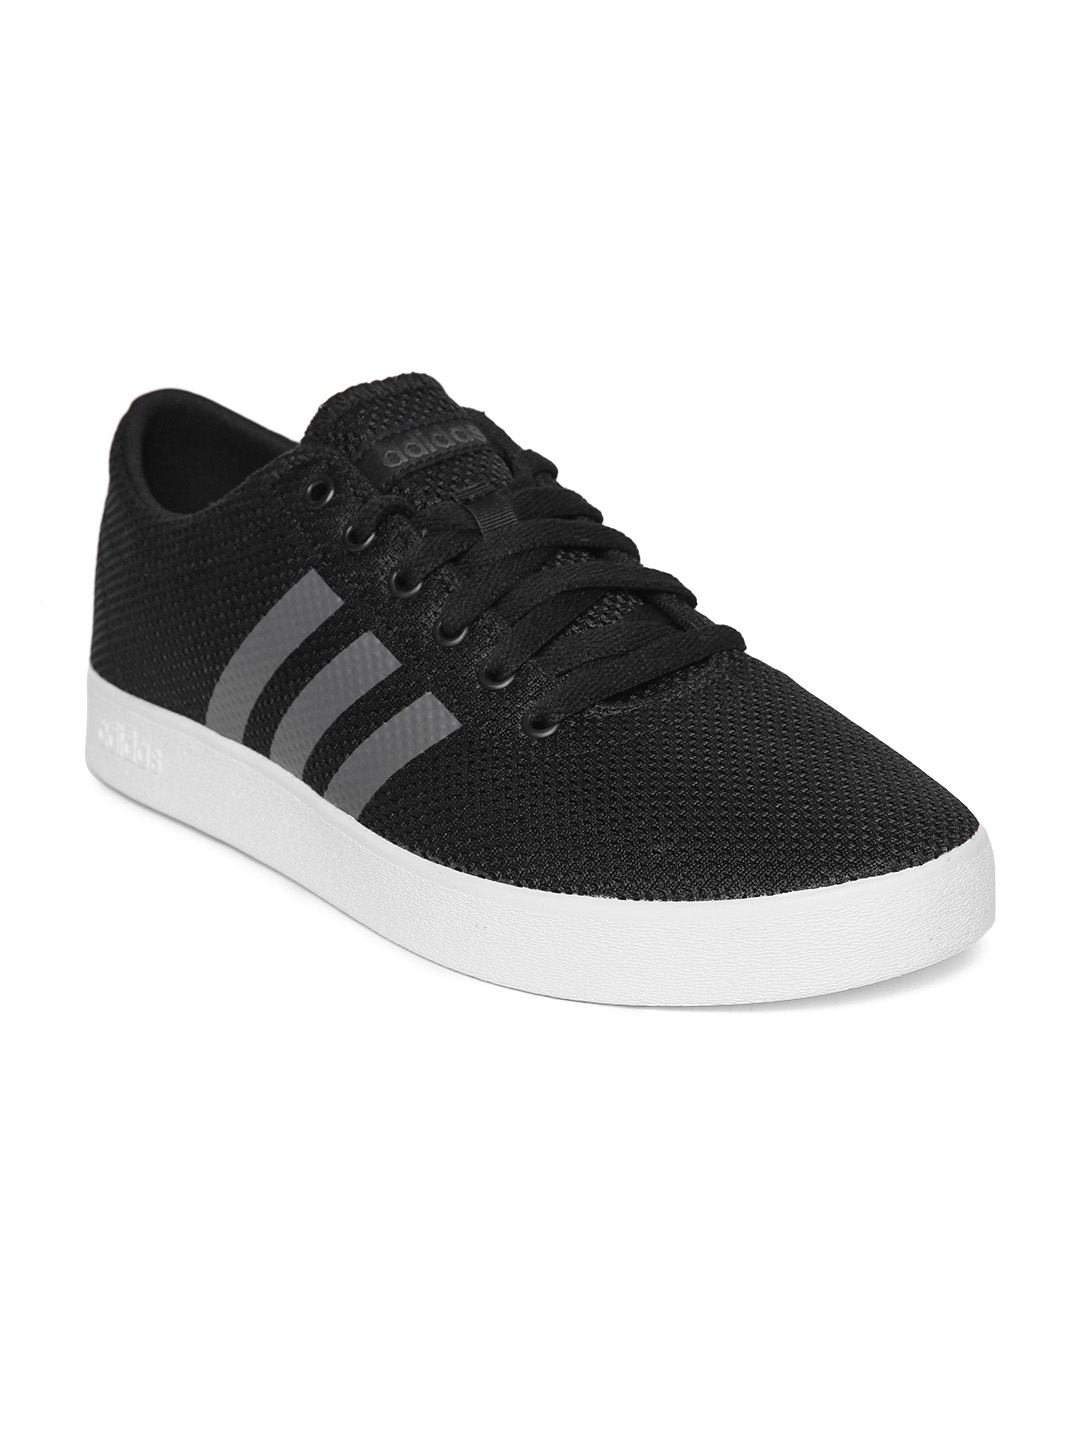 Buy ADIDAS Men Black EASY VULC 2.0 Skateboarding Shoes - Sports Shoes ...